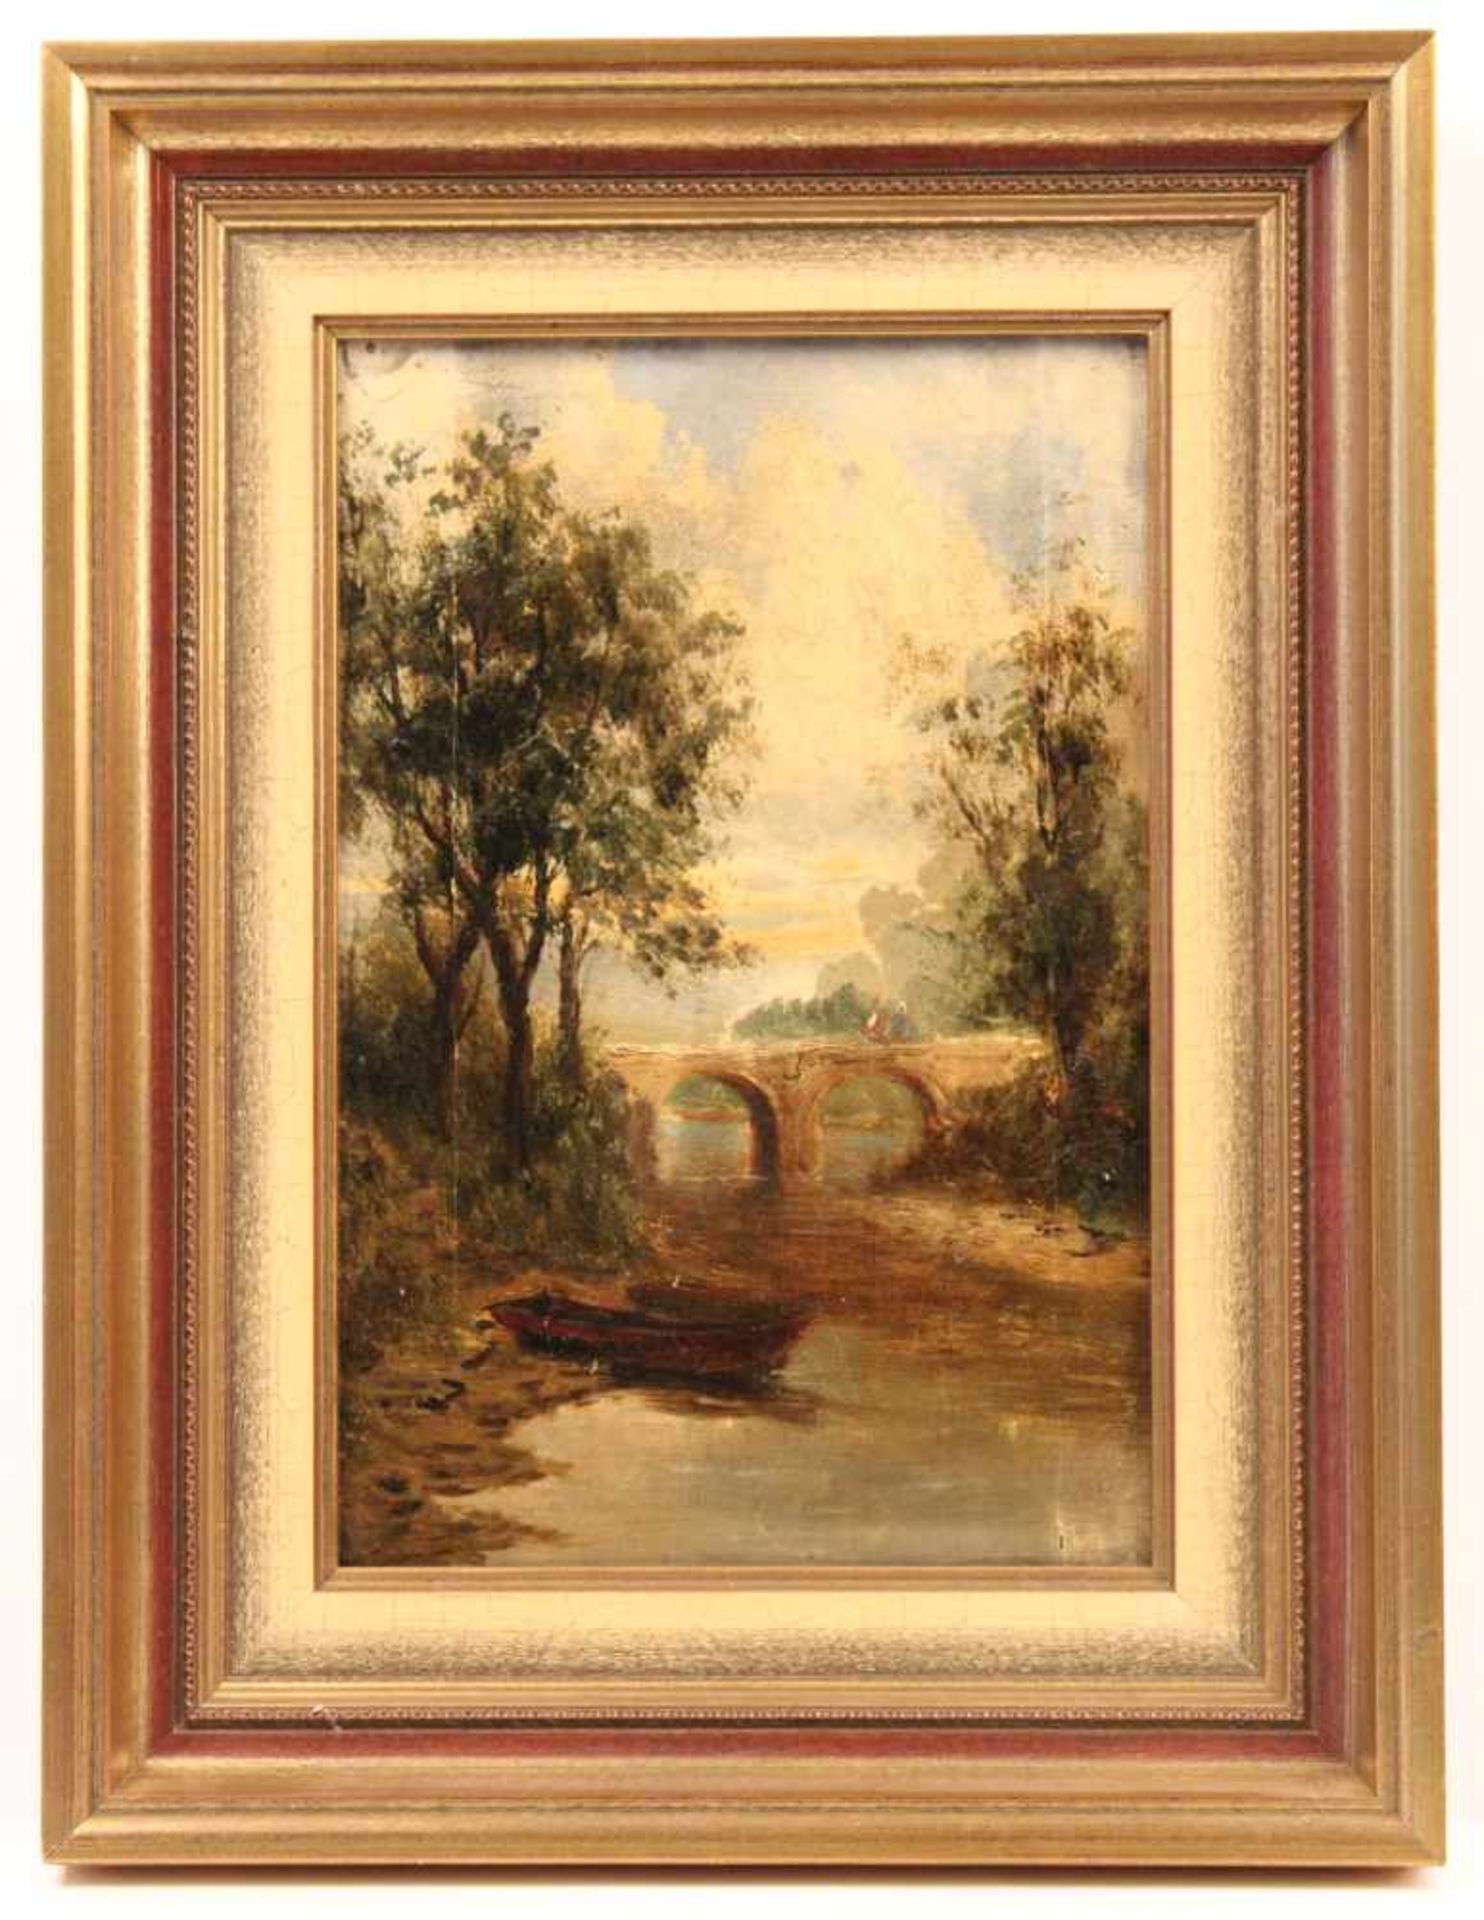 Will. M.Ansicht Sankt Bartholomä. Öl/Lwd. H: 30 x 32 cm. Rahmen. 49 x 43 cm. - Bild 4 aus 4